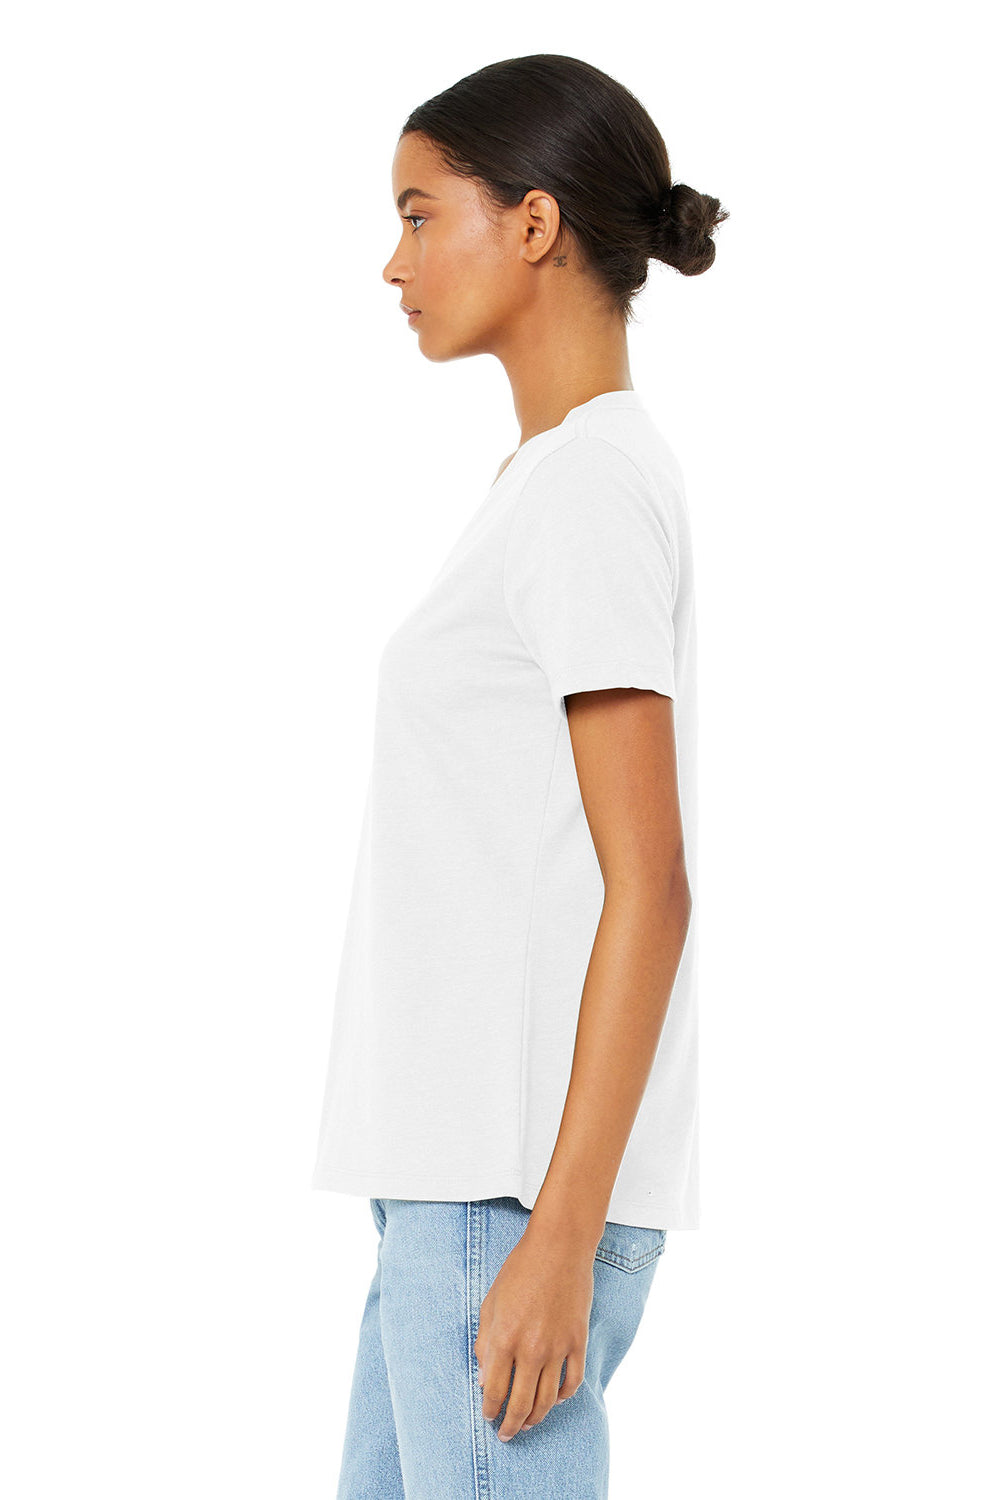 Bella + Canvas BC6405CVC Womens CVC Short Sleeve V-Neck T-Shirt Solid White Model Side